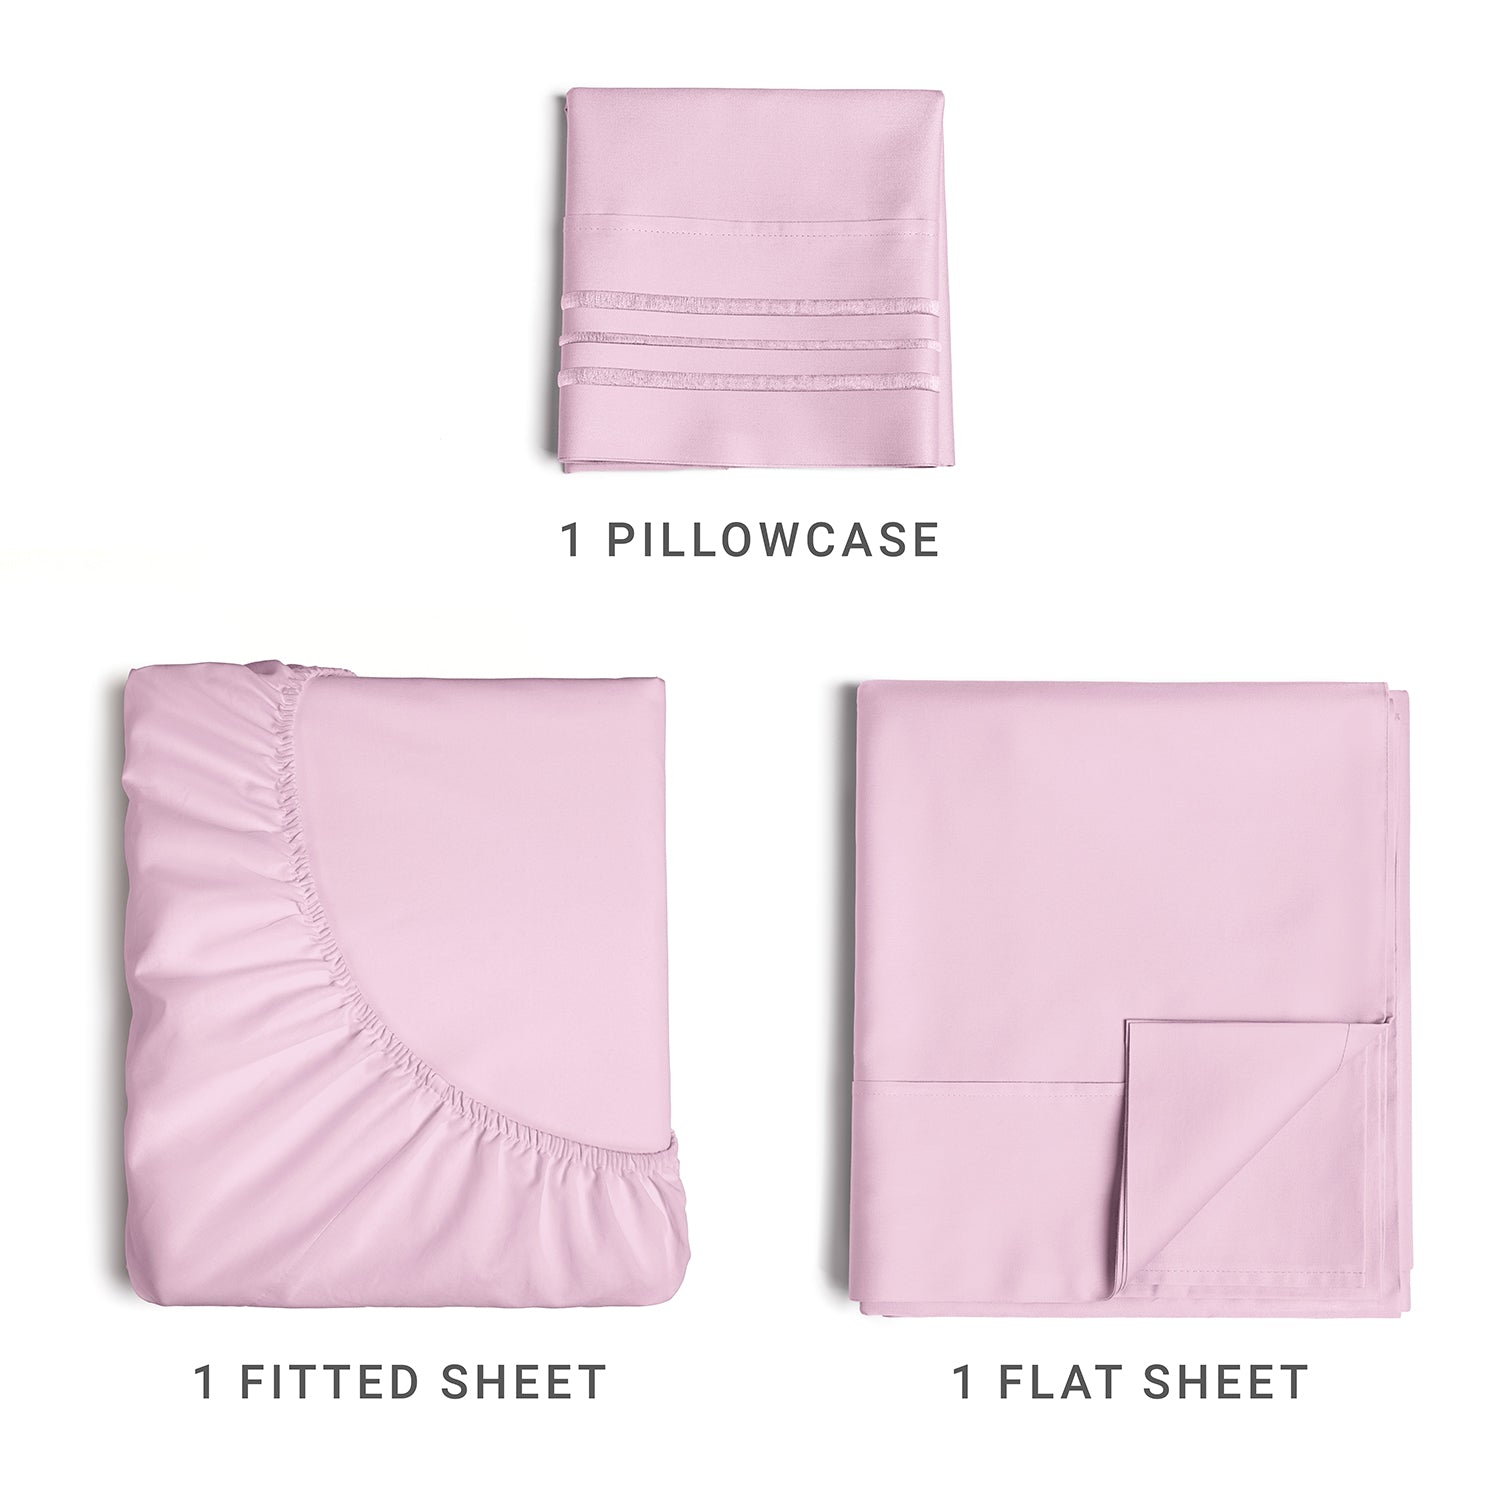 tes 4pc Sheet Set New Colors/Patterns - Light Pink